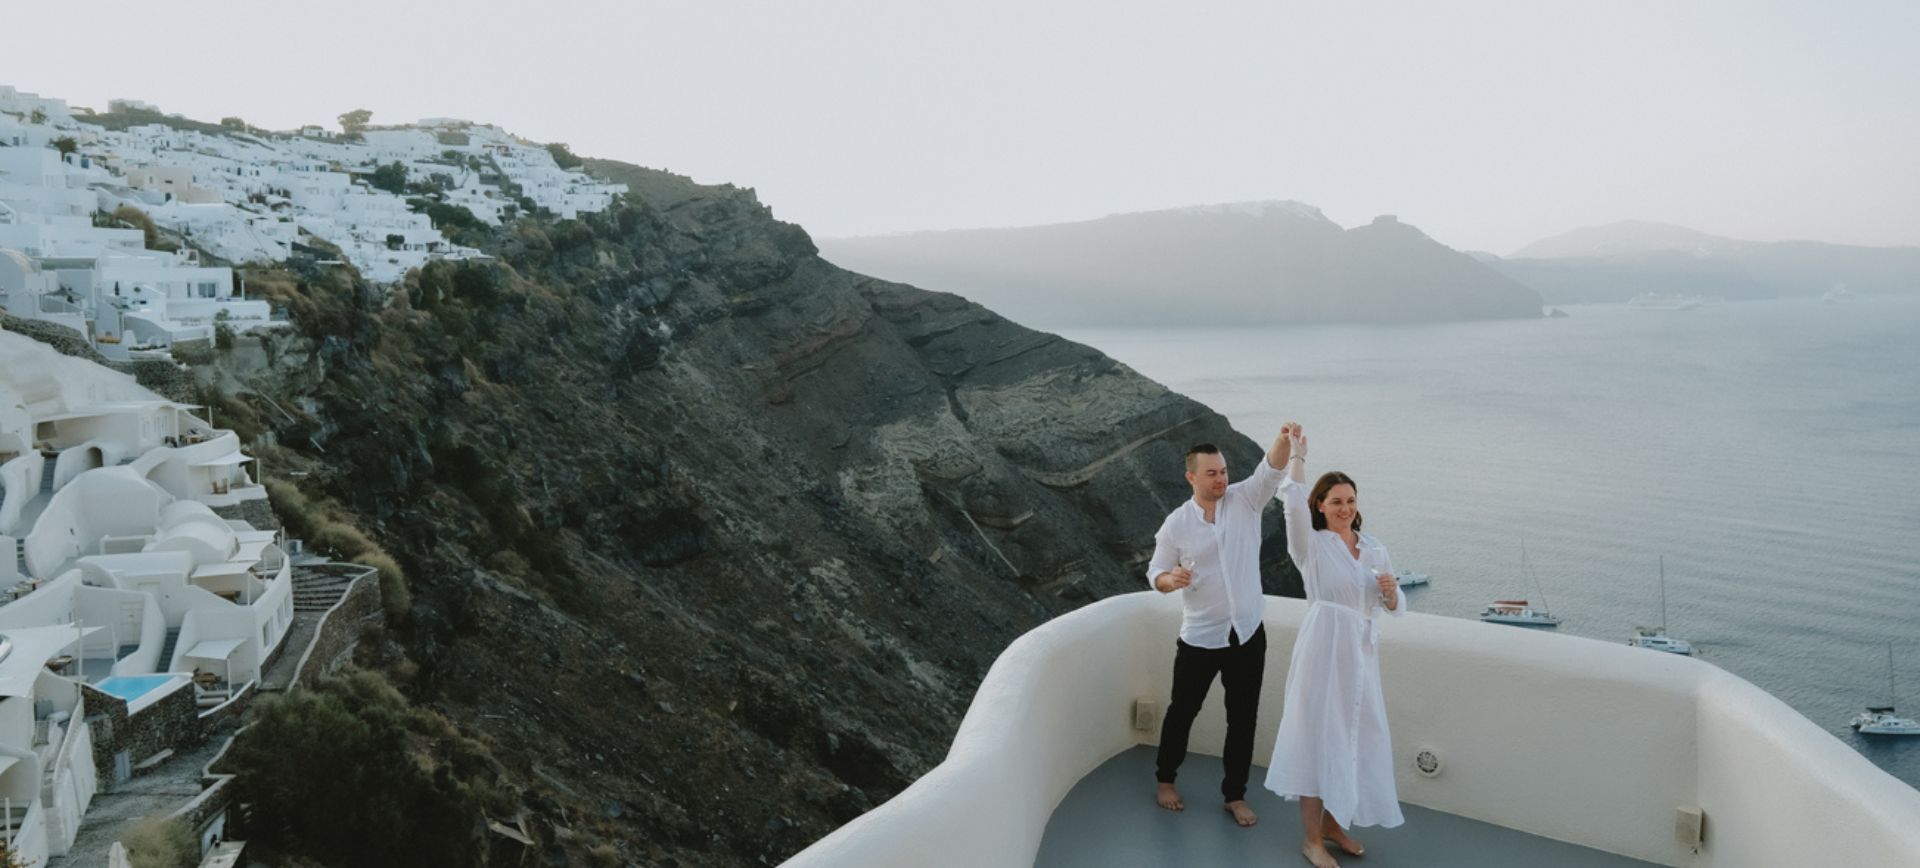 Santorini Romantic Elopement Package with Cliffside Wedding Ceremony Dinner in Greece